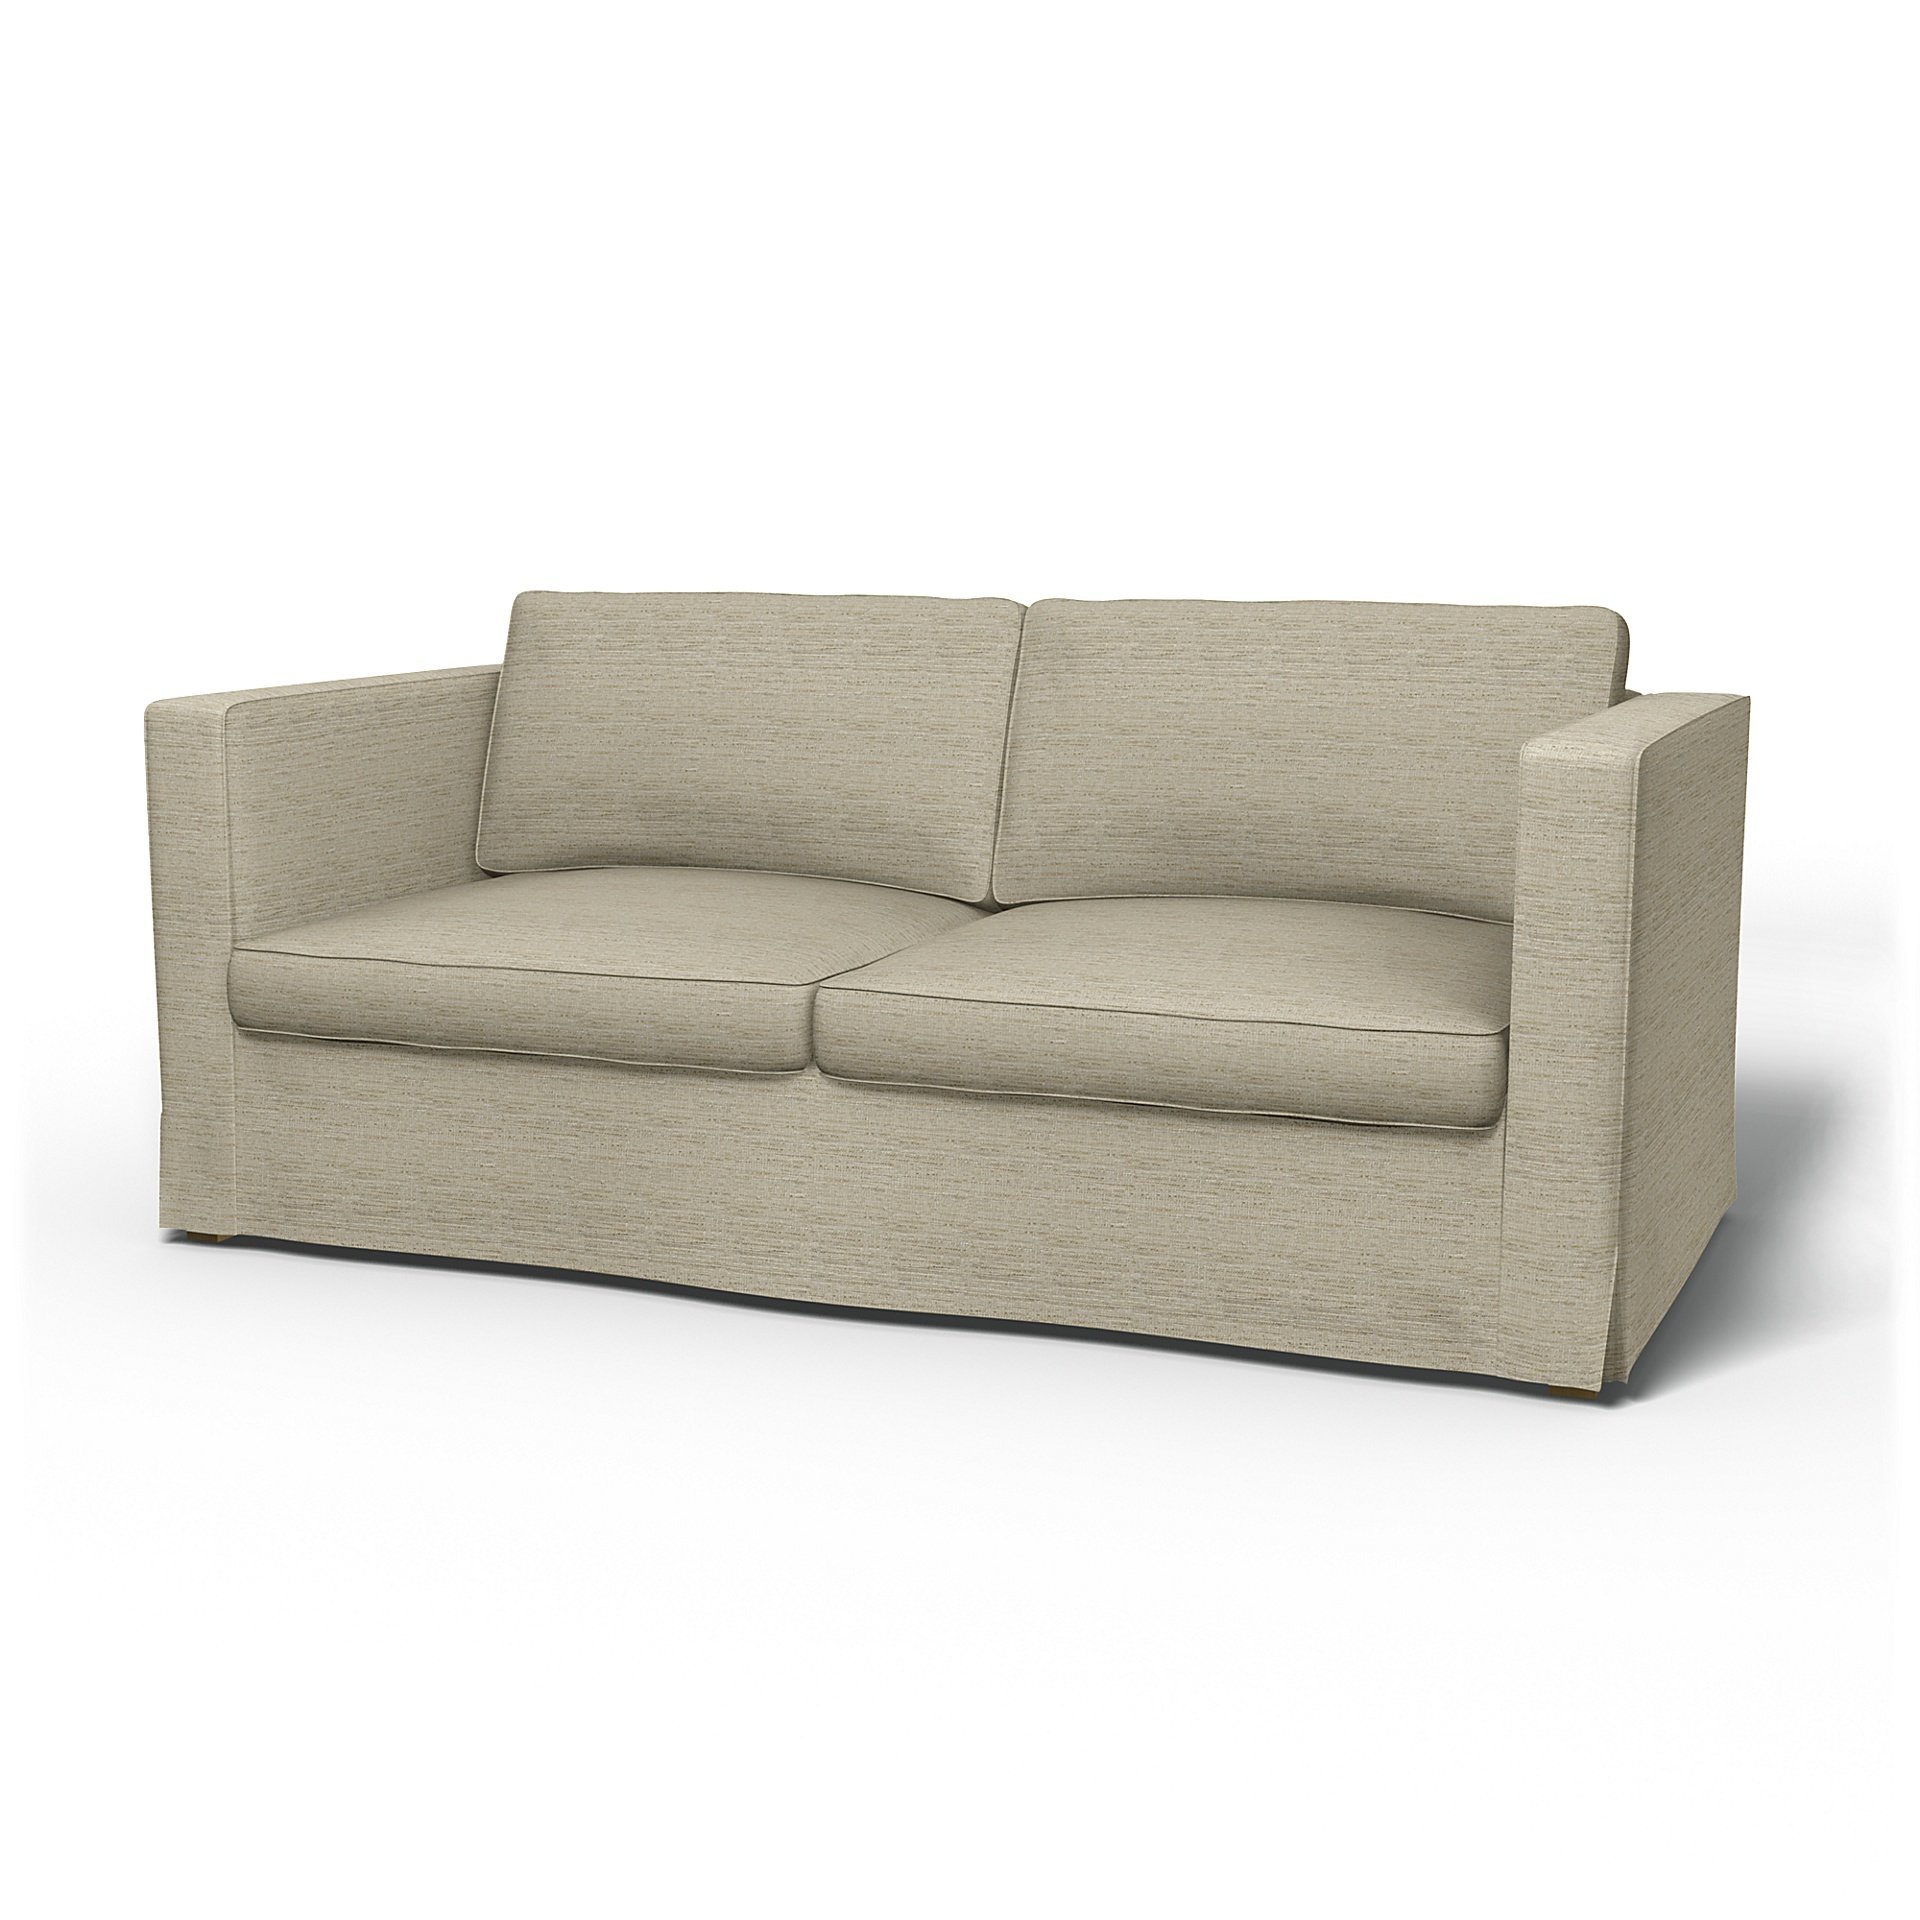 IKEA - Karlanda Sofa Bed Cover, Light Sand, Boucle & Texture - Bemz